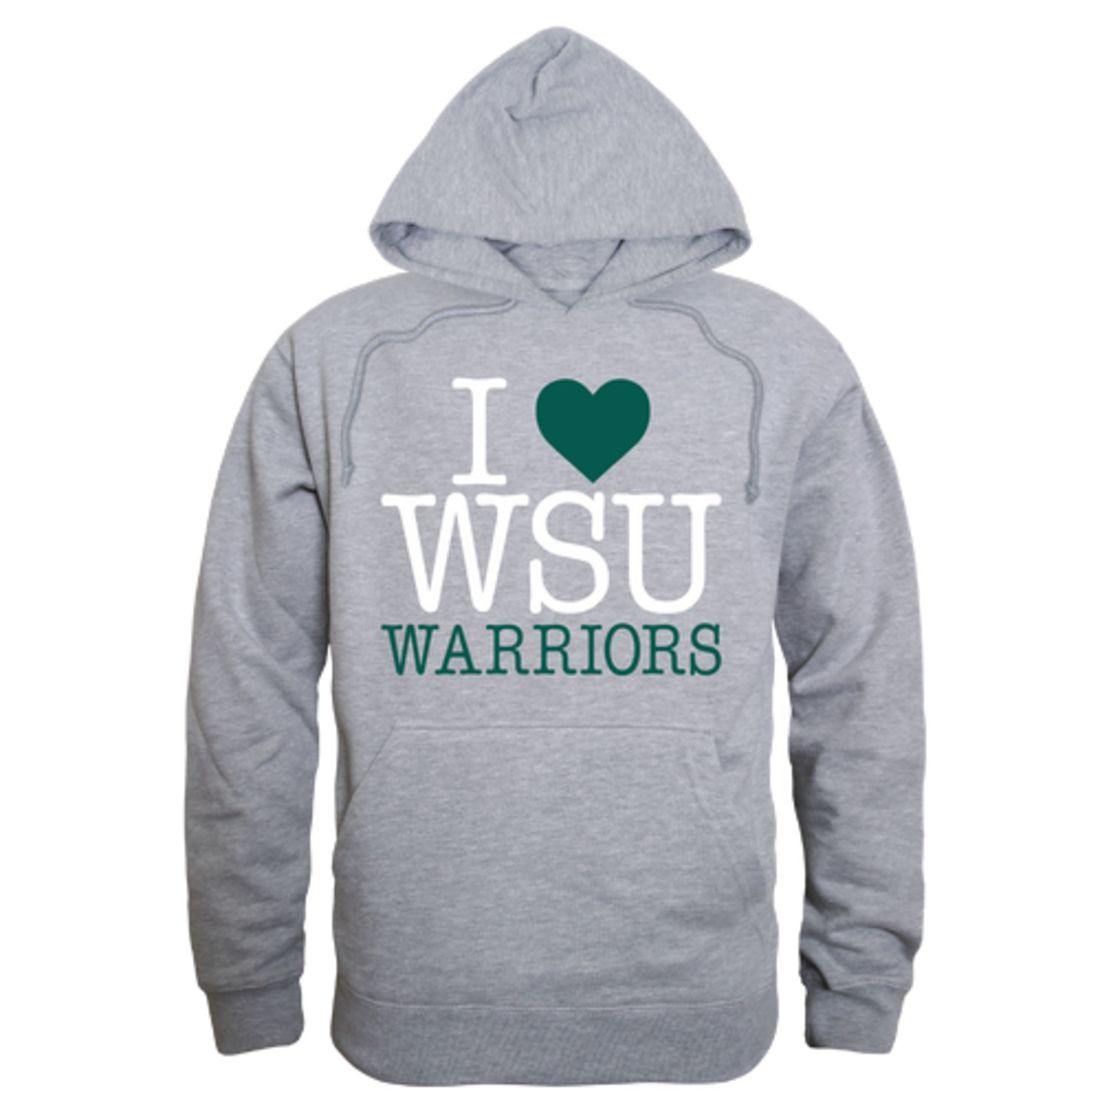 I Love Wayne State University Warriors Hoodie Sweatshirt-Campus-Wardrobe